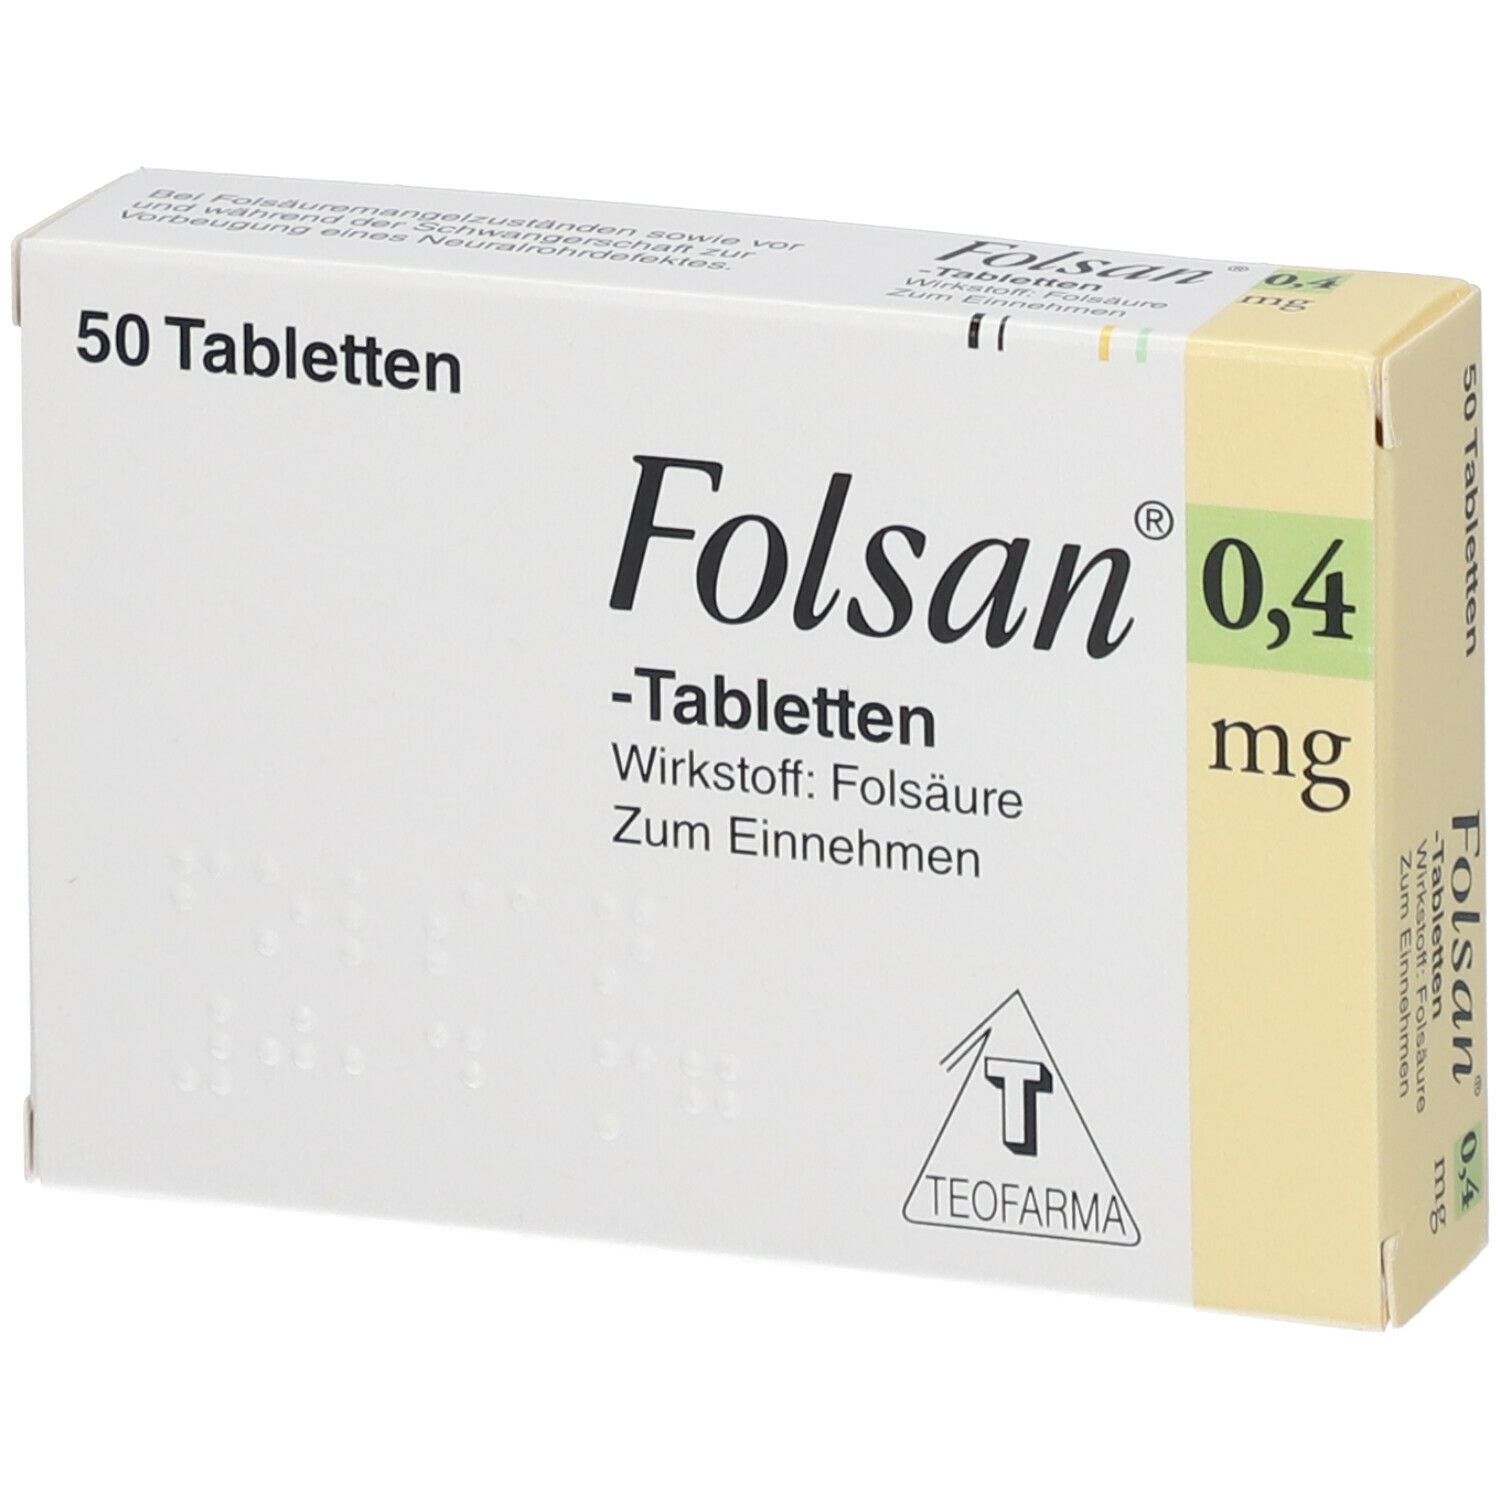 Folsan® 0,4 mg